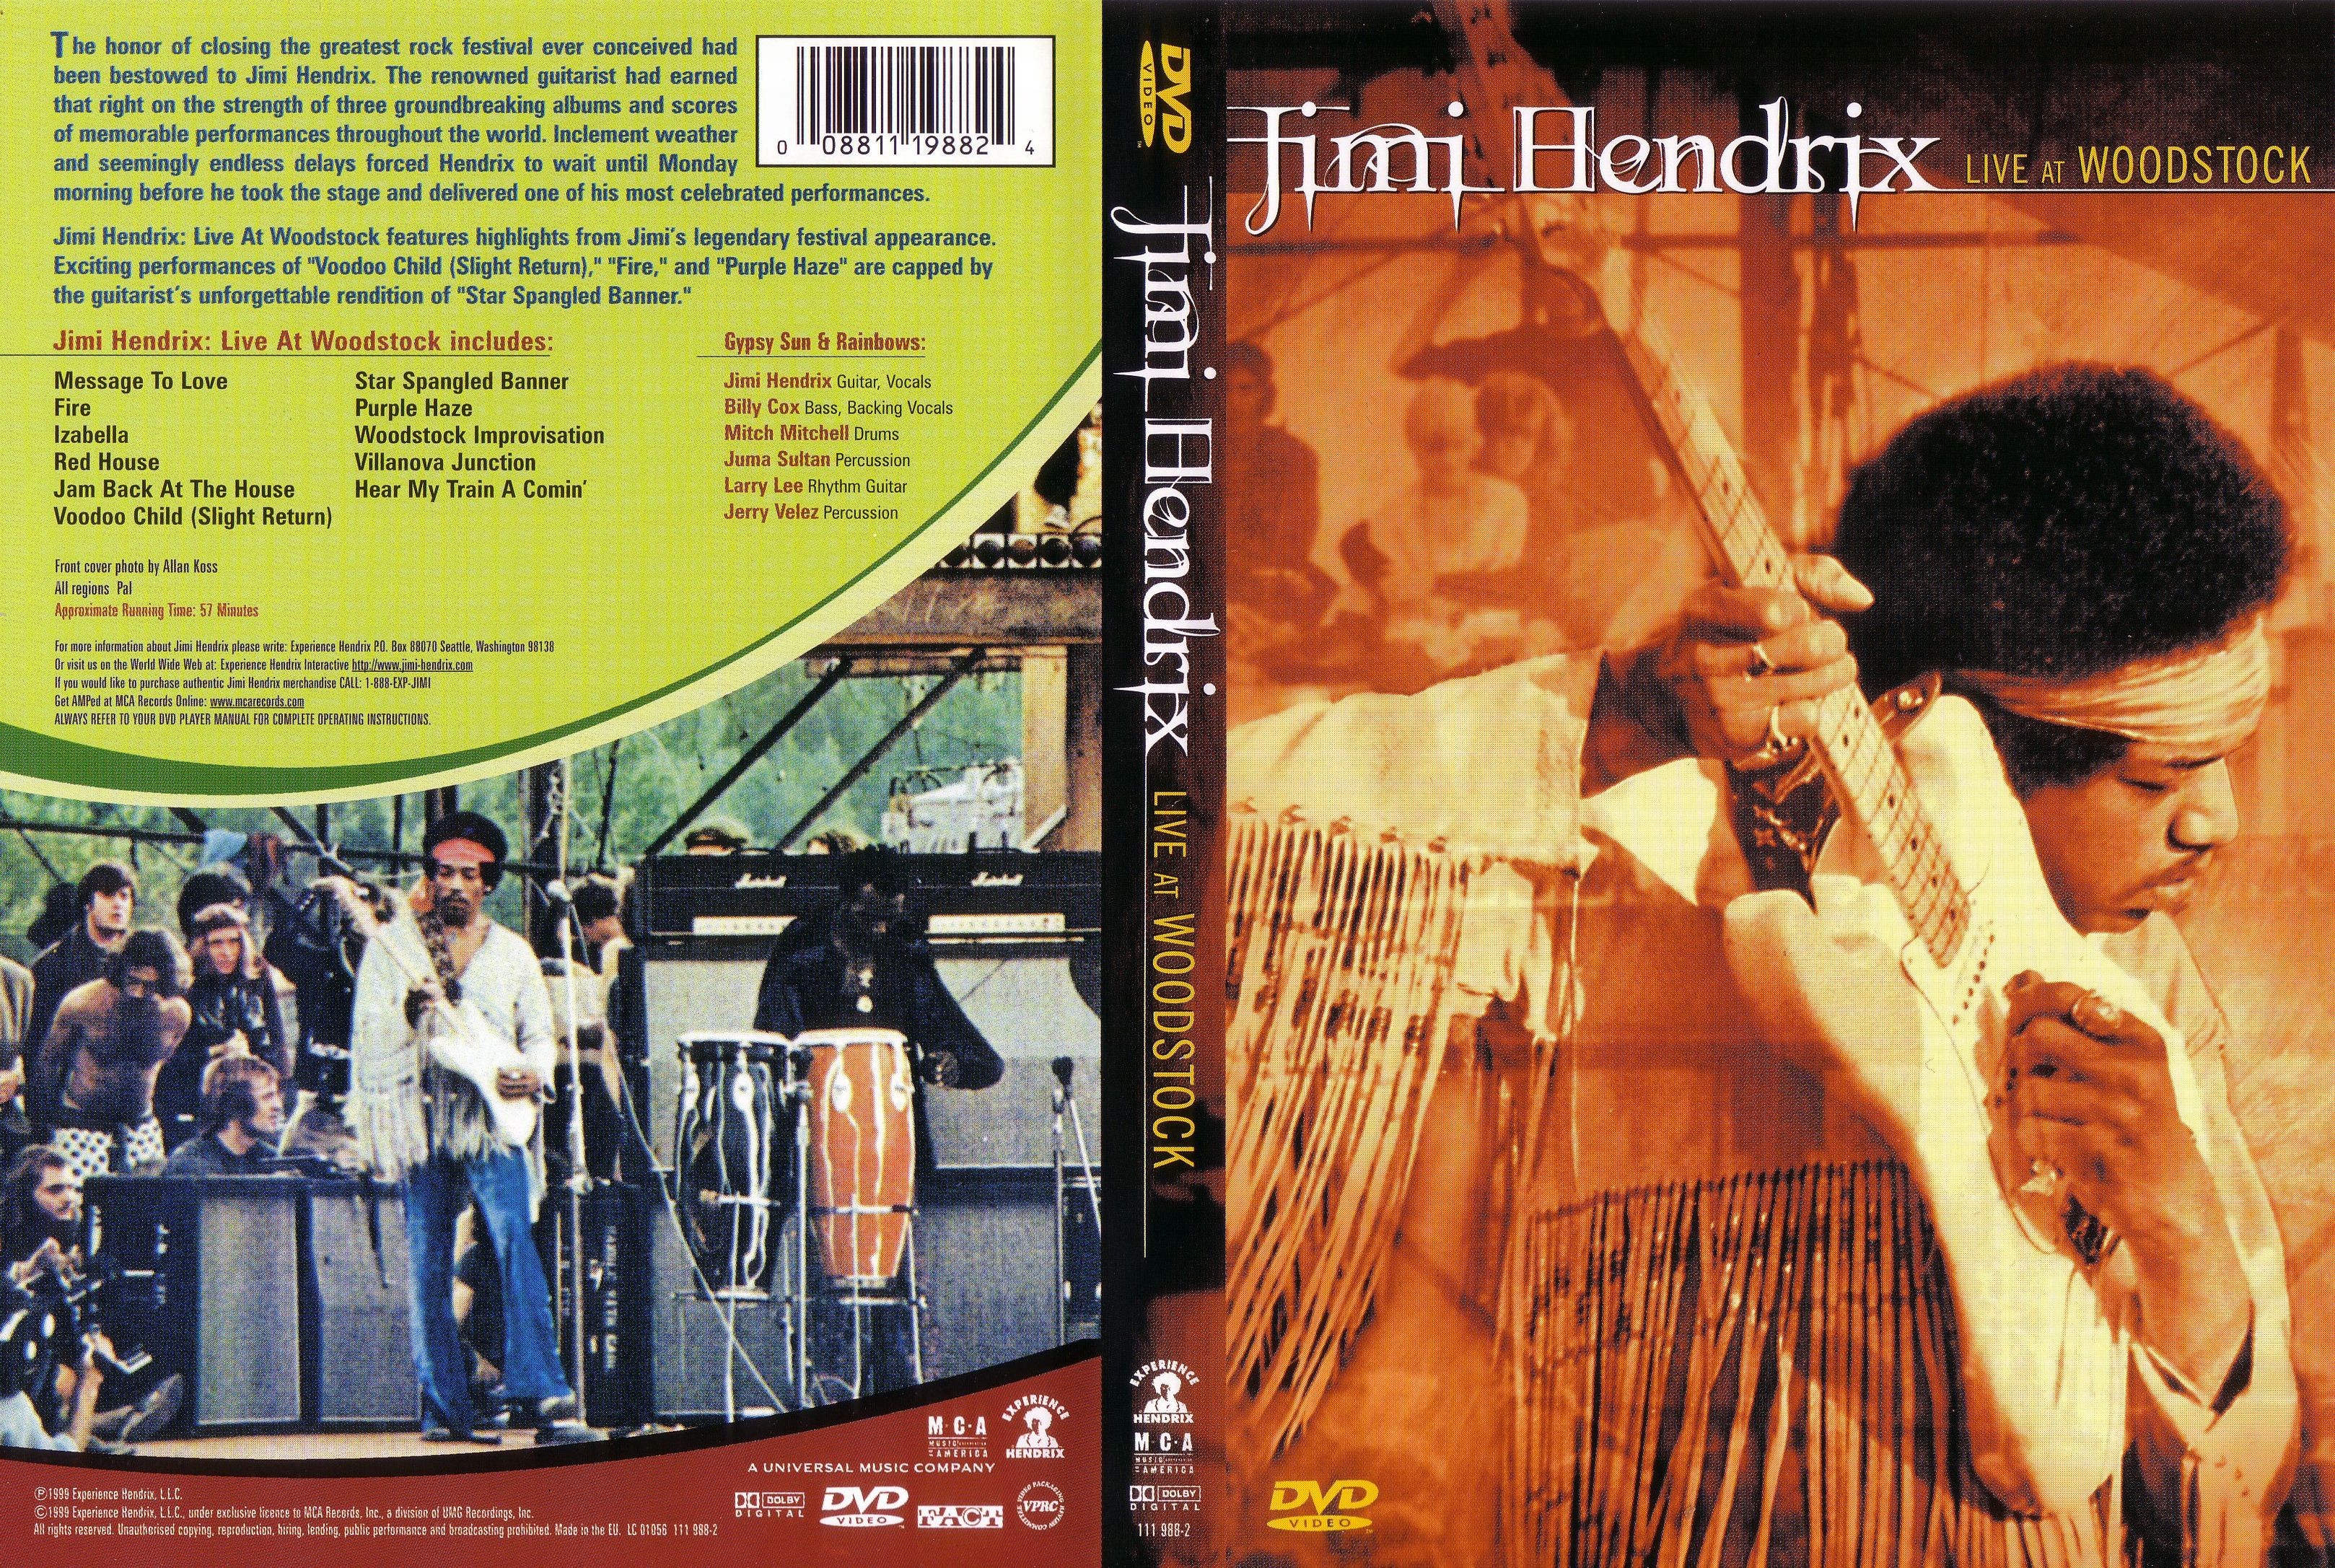 Jaquette DVD Jimi Hendrix Live at Woodstock